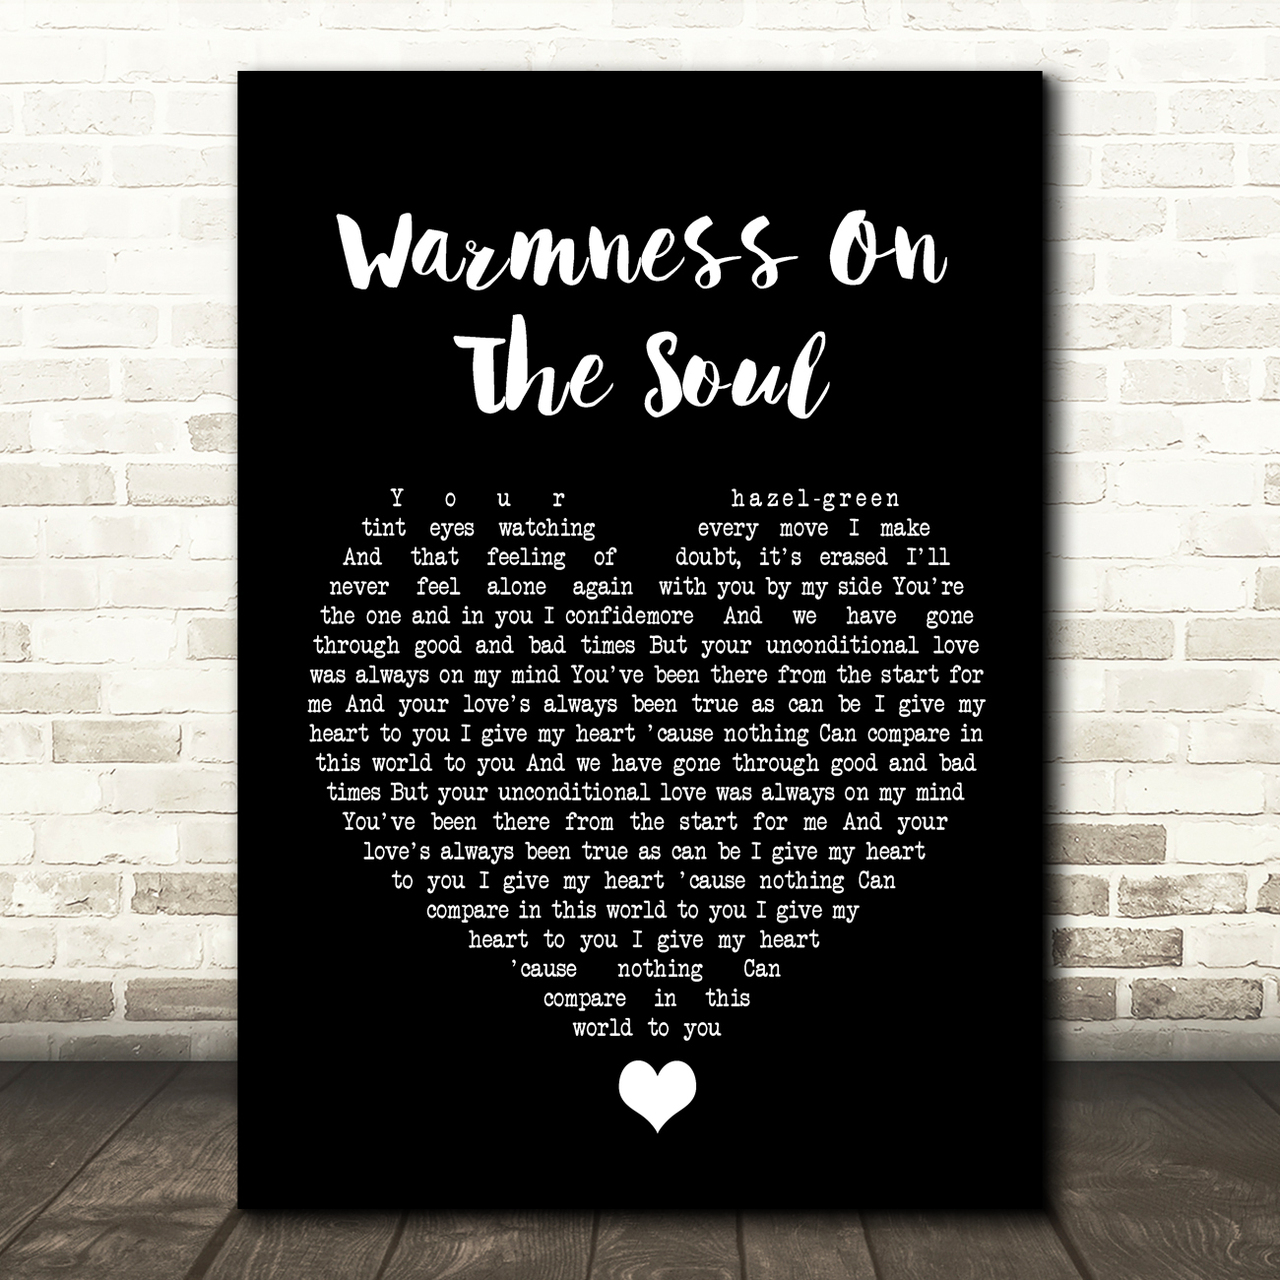 Avenged Sevenfold Warmness On The Soul Black Heart Song Lyric Wall Art Print